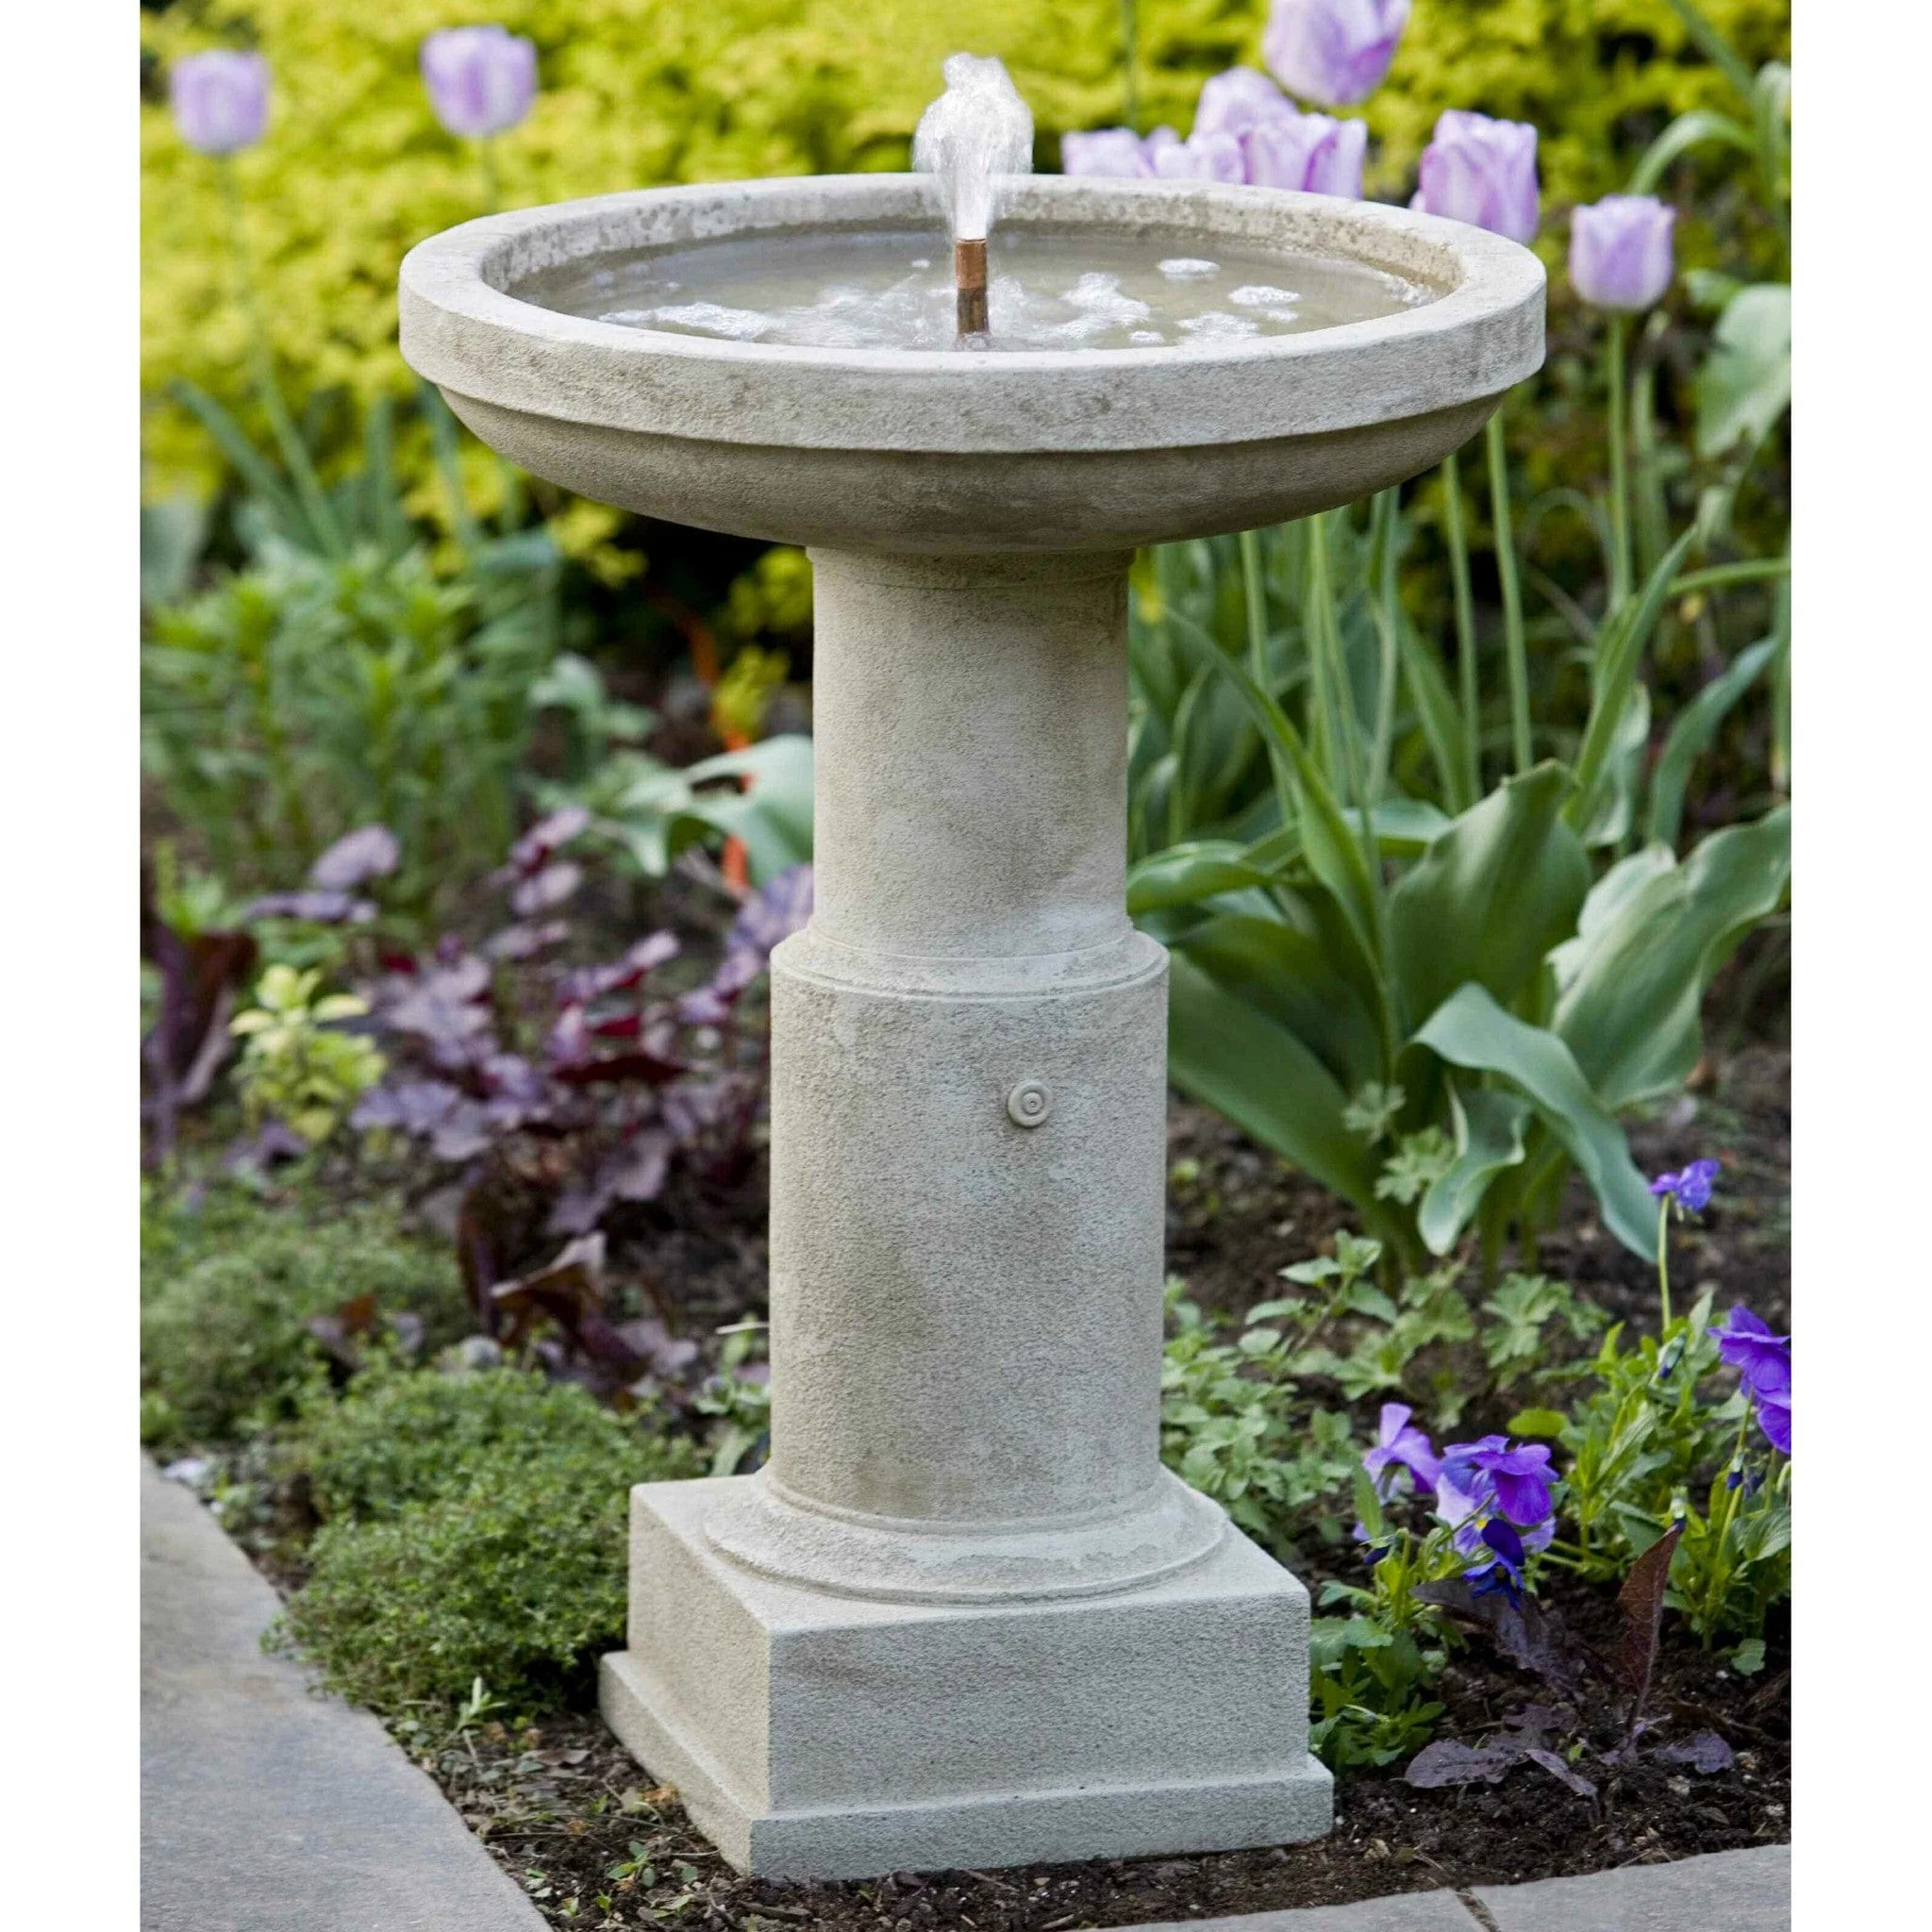 Powys Pedestal Bird Bath Fountain